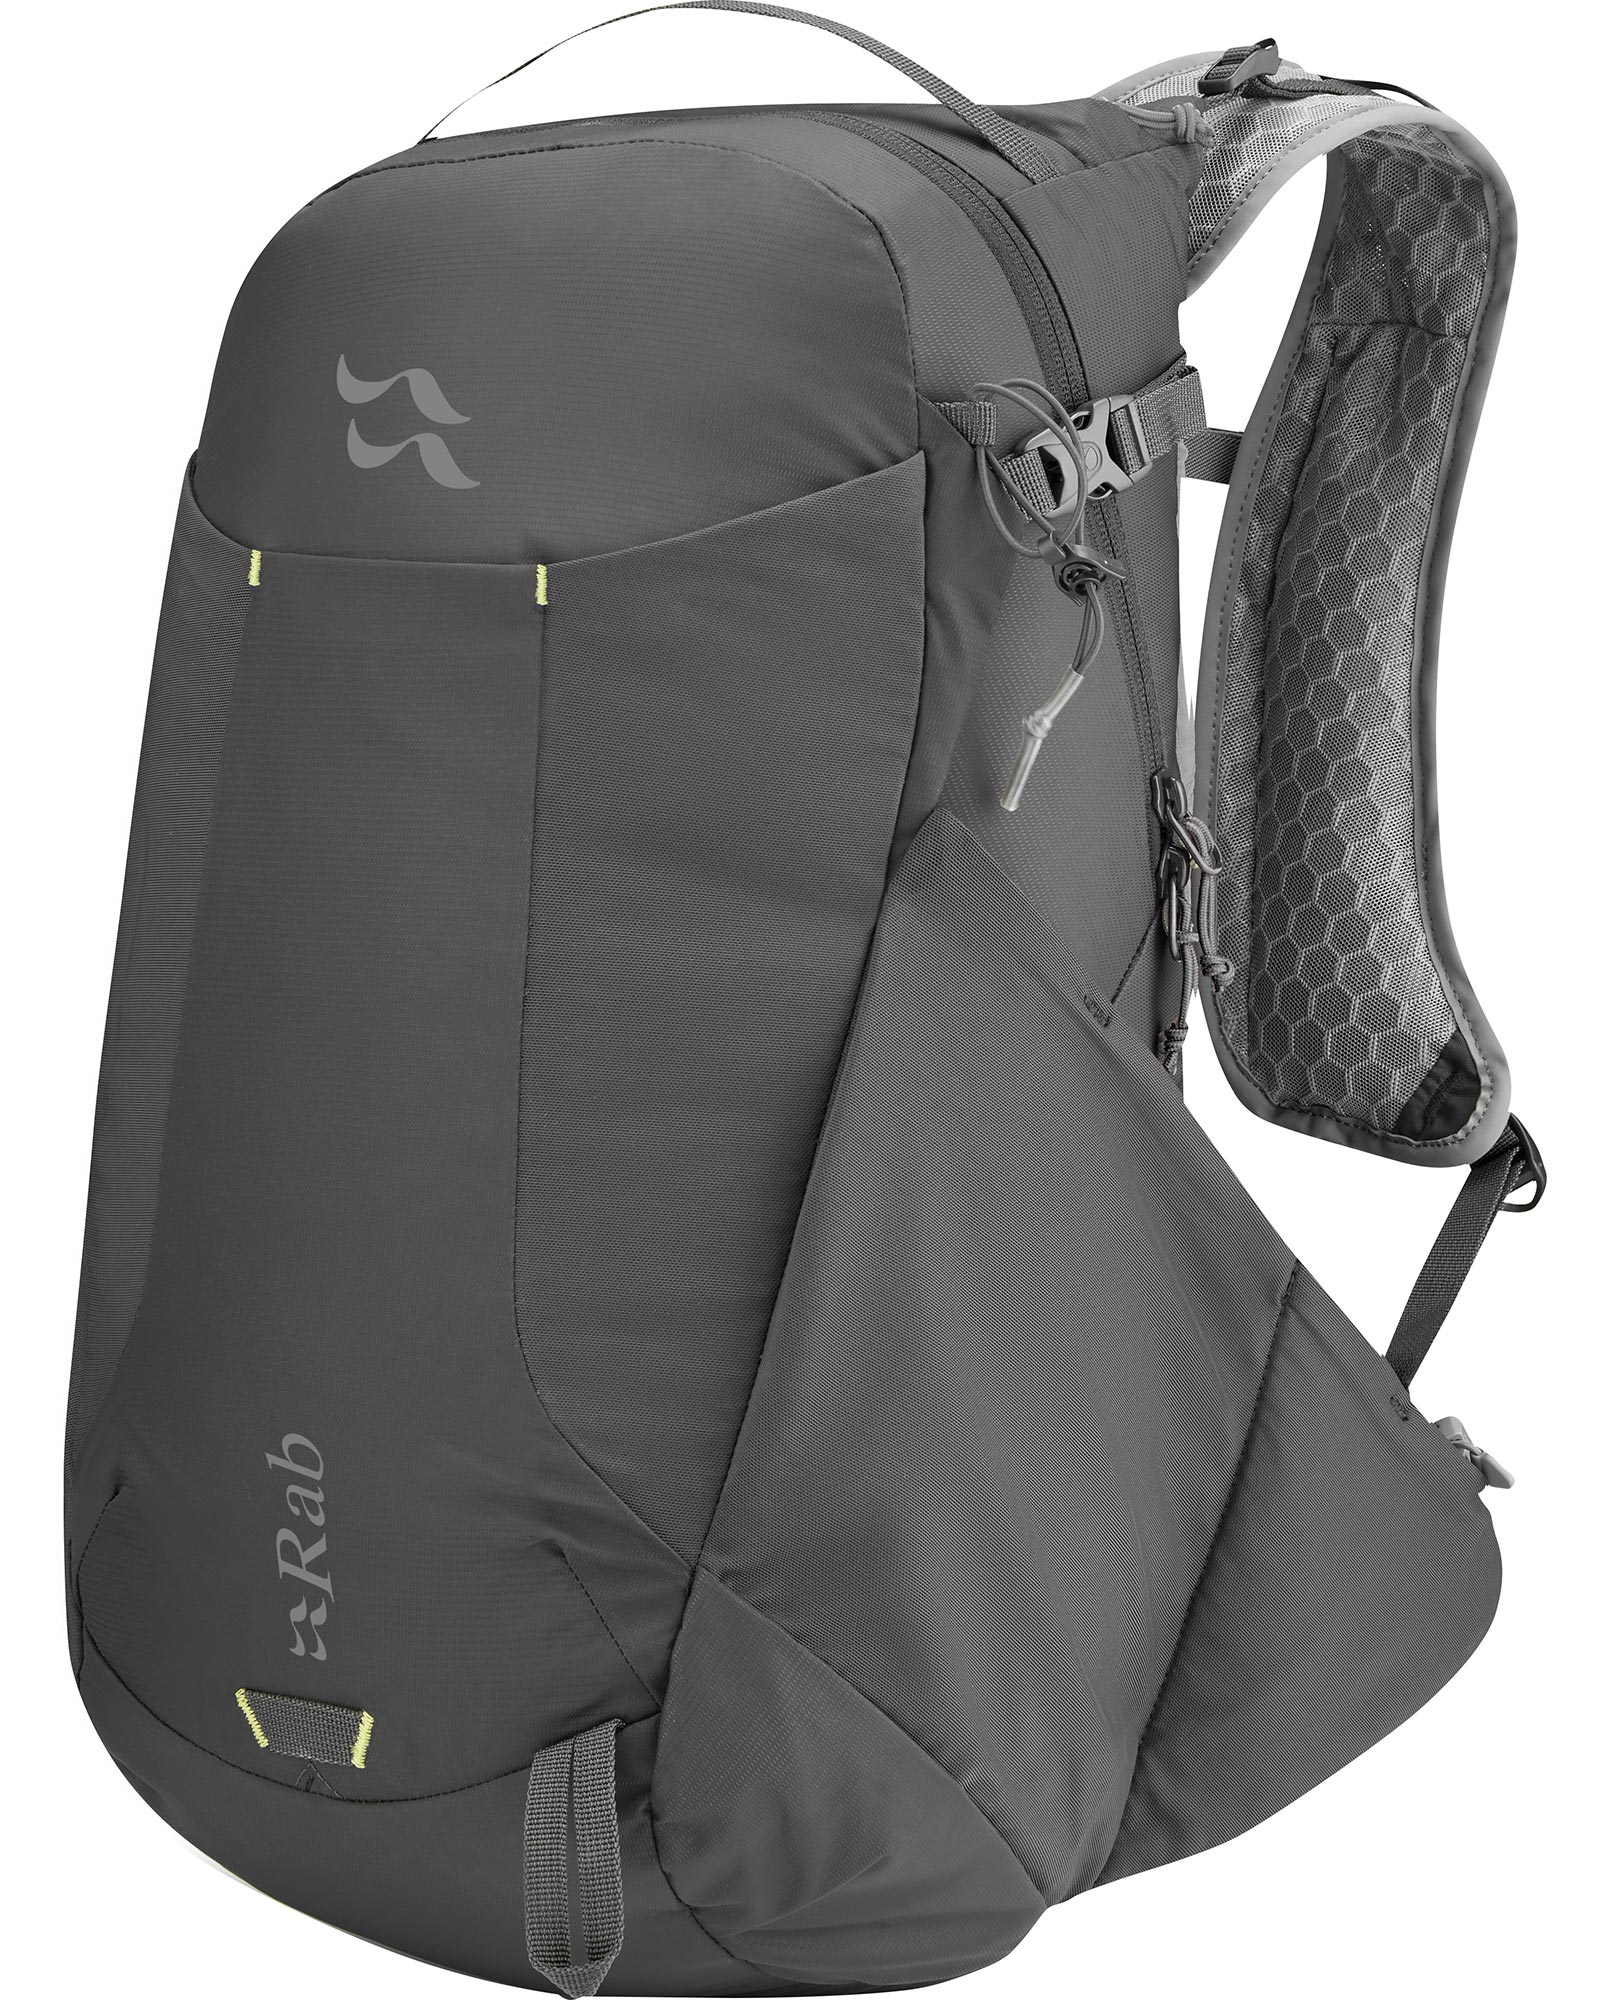 Rab Aeon LT 25 Backpack 0